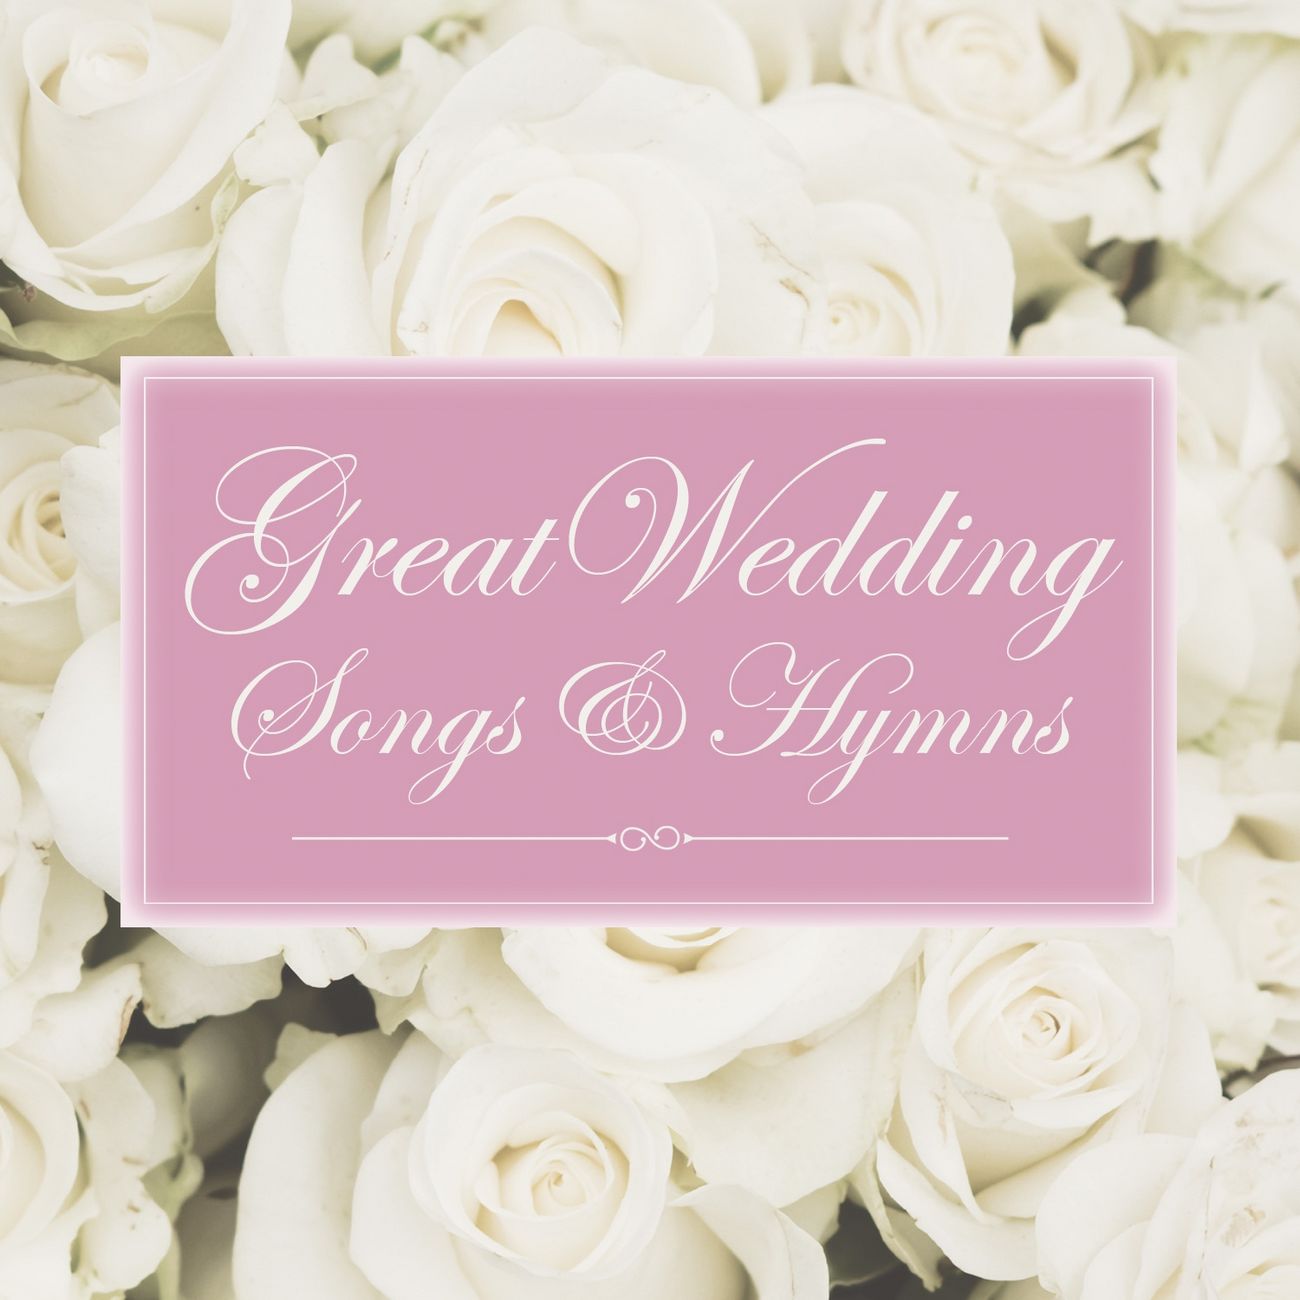 Great Wedding Songs & Hymns